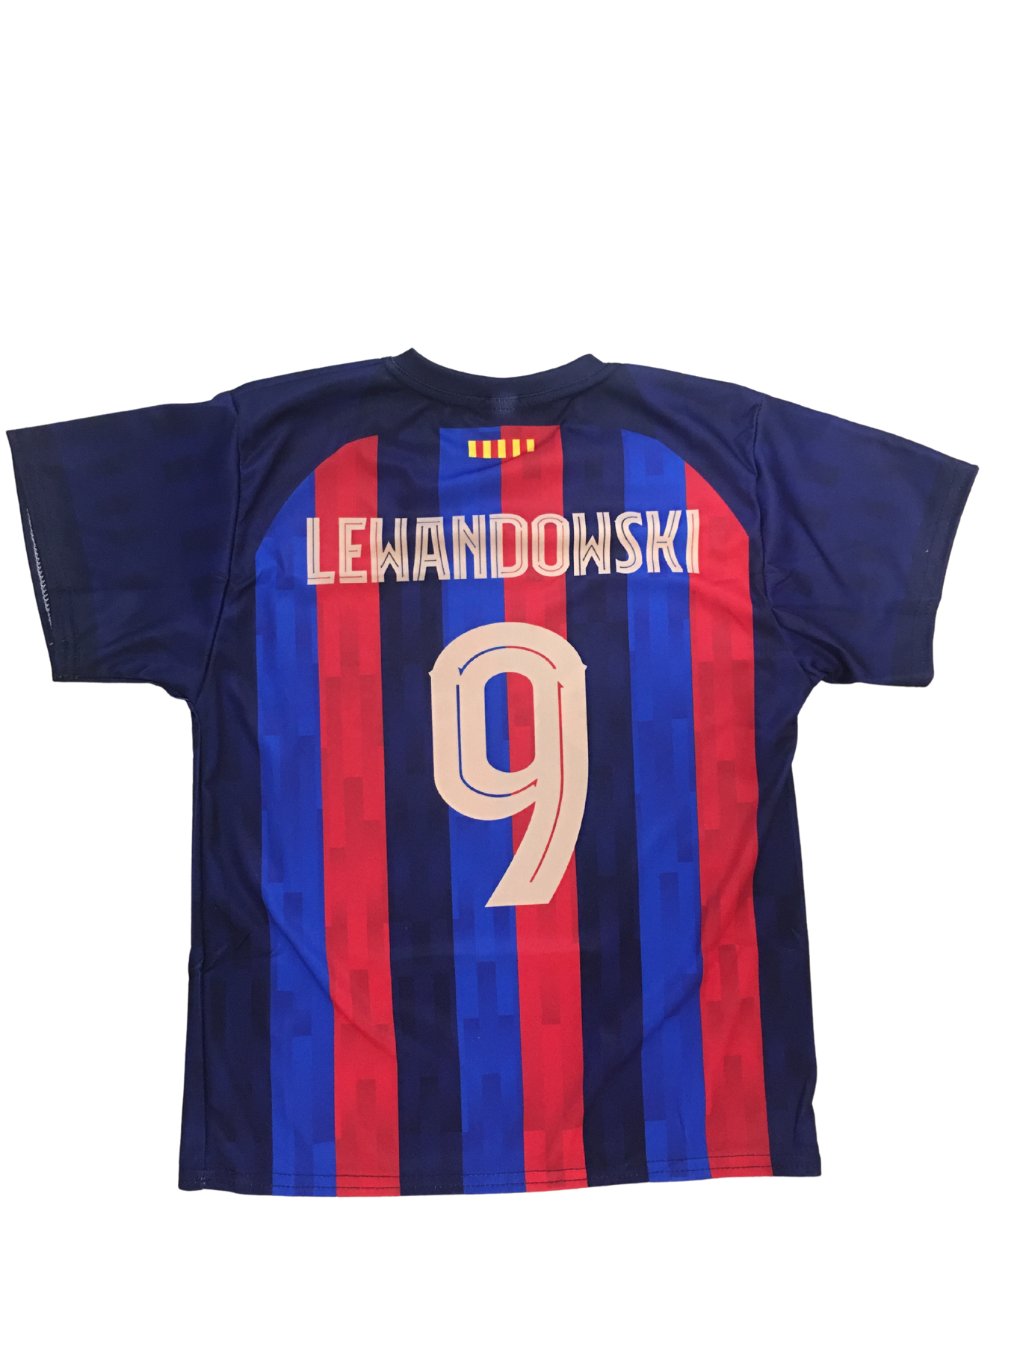 Chlapecký Fotbalový dres FC Barcelona Lewandowski 9 - 280424 - VMObleceni.cz